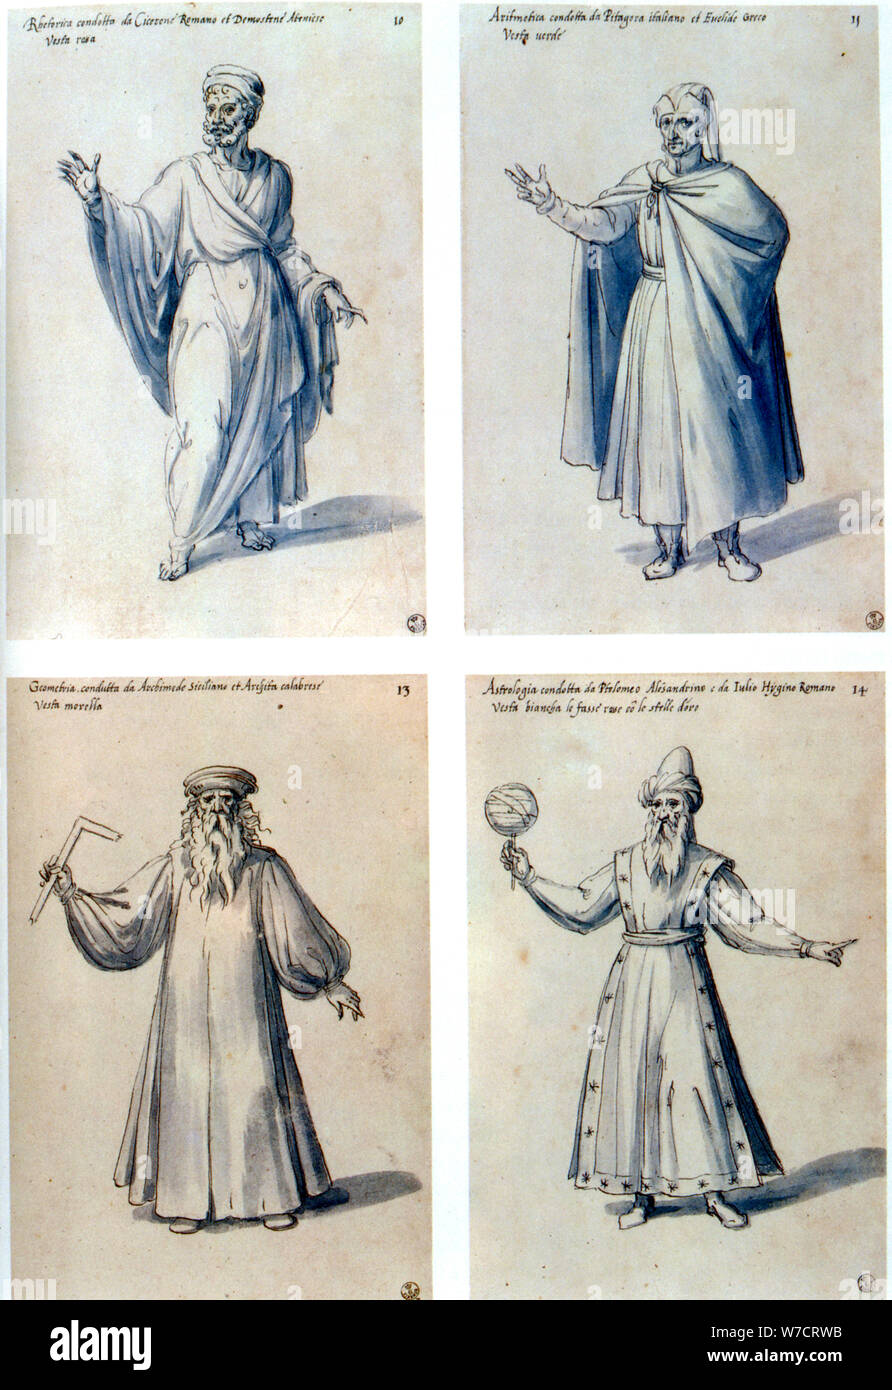 Costume design for classical figures, 16th century. Artist: Giuseppe Arcimboldi Stock Photo